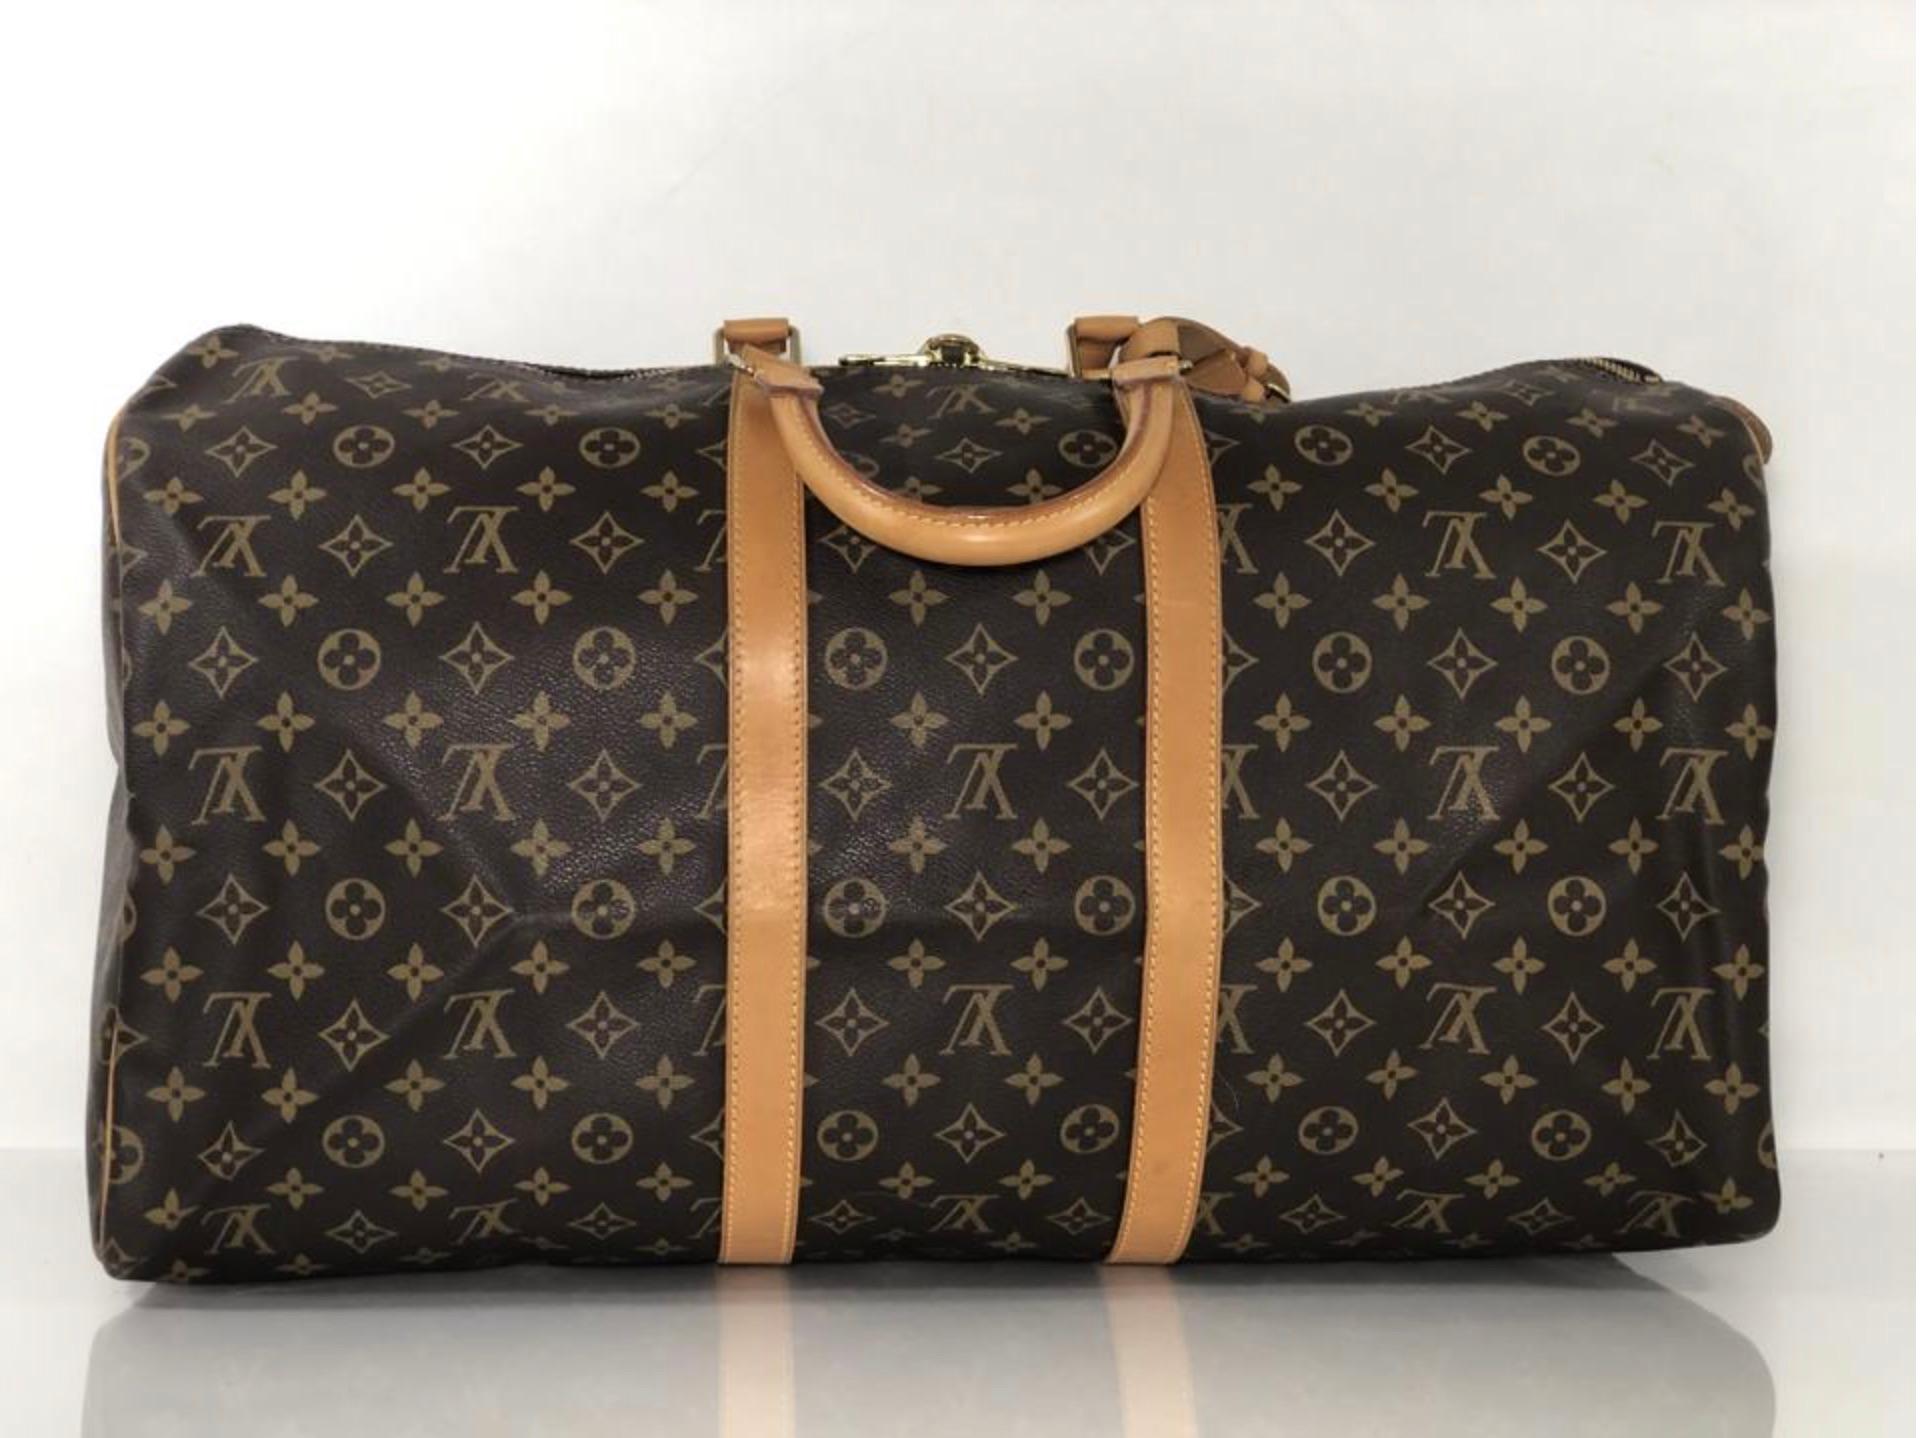  Louis Vuitton Monogram Keepall 55 Top Handle Travel Bag For Sale 1